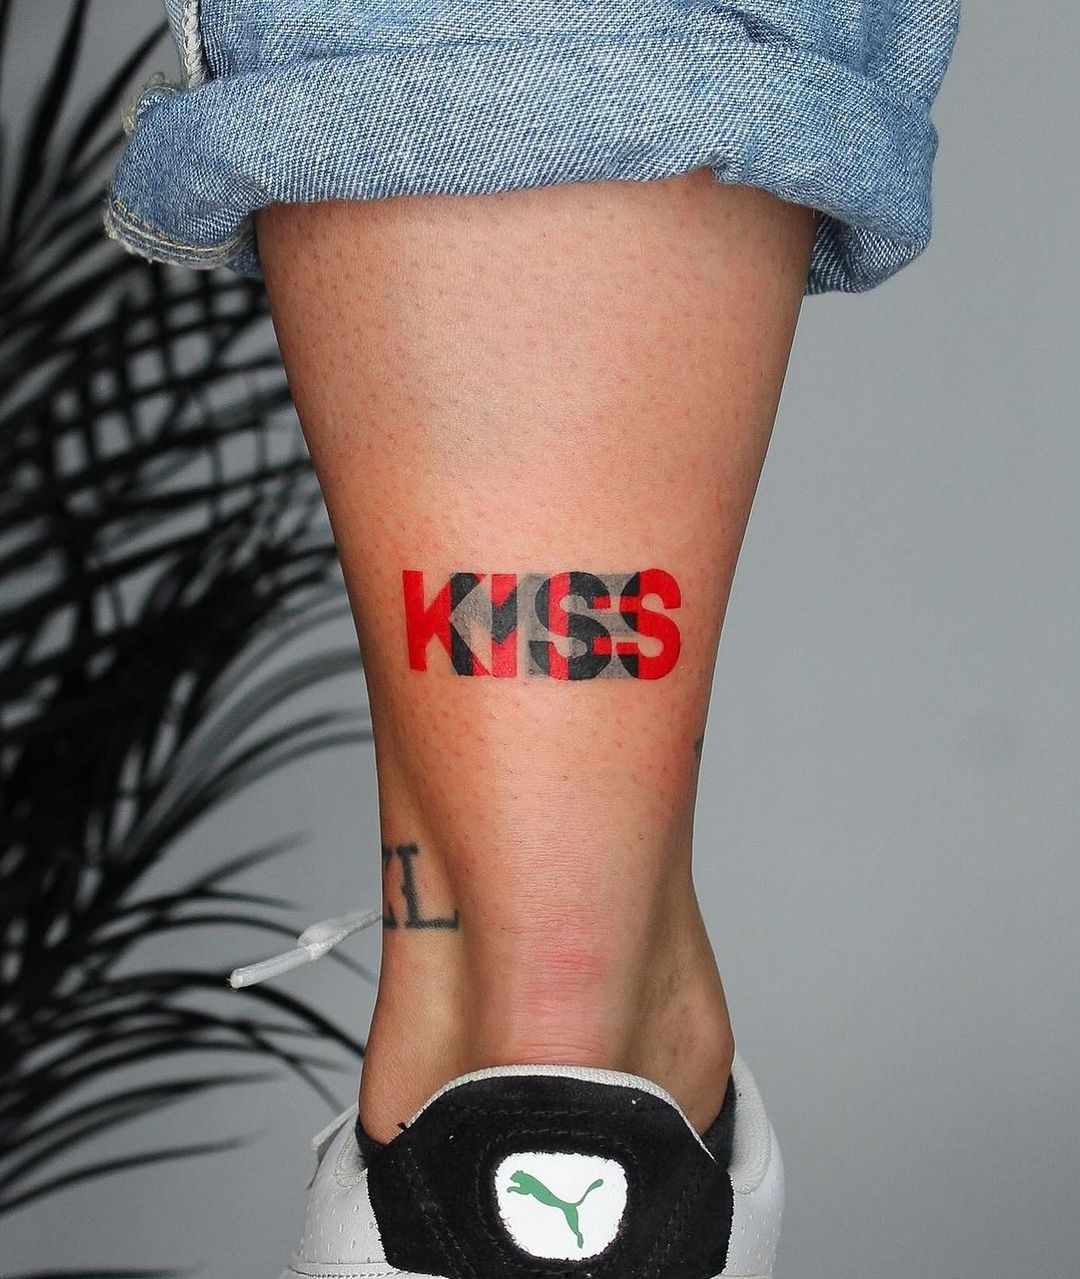 Small leg tattoo design by one million. tattoos